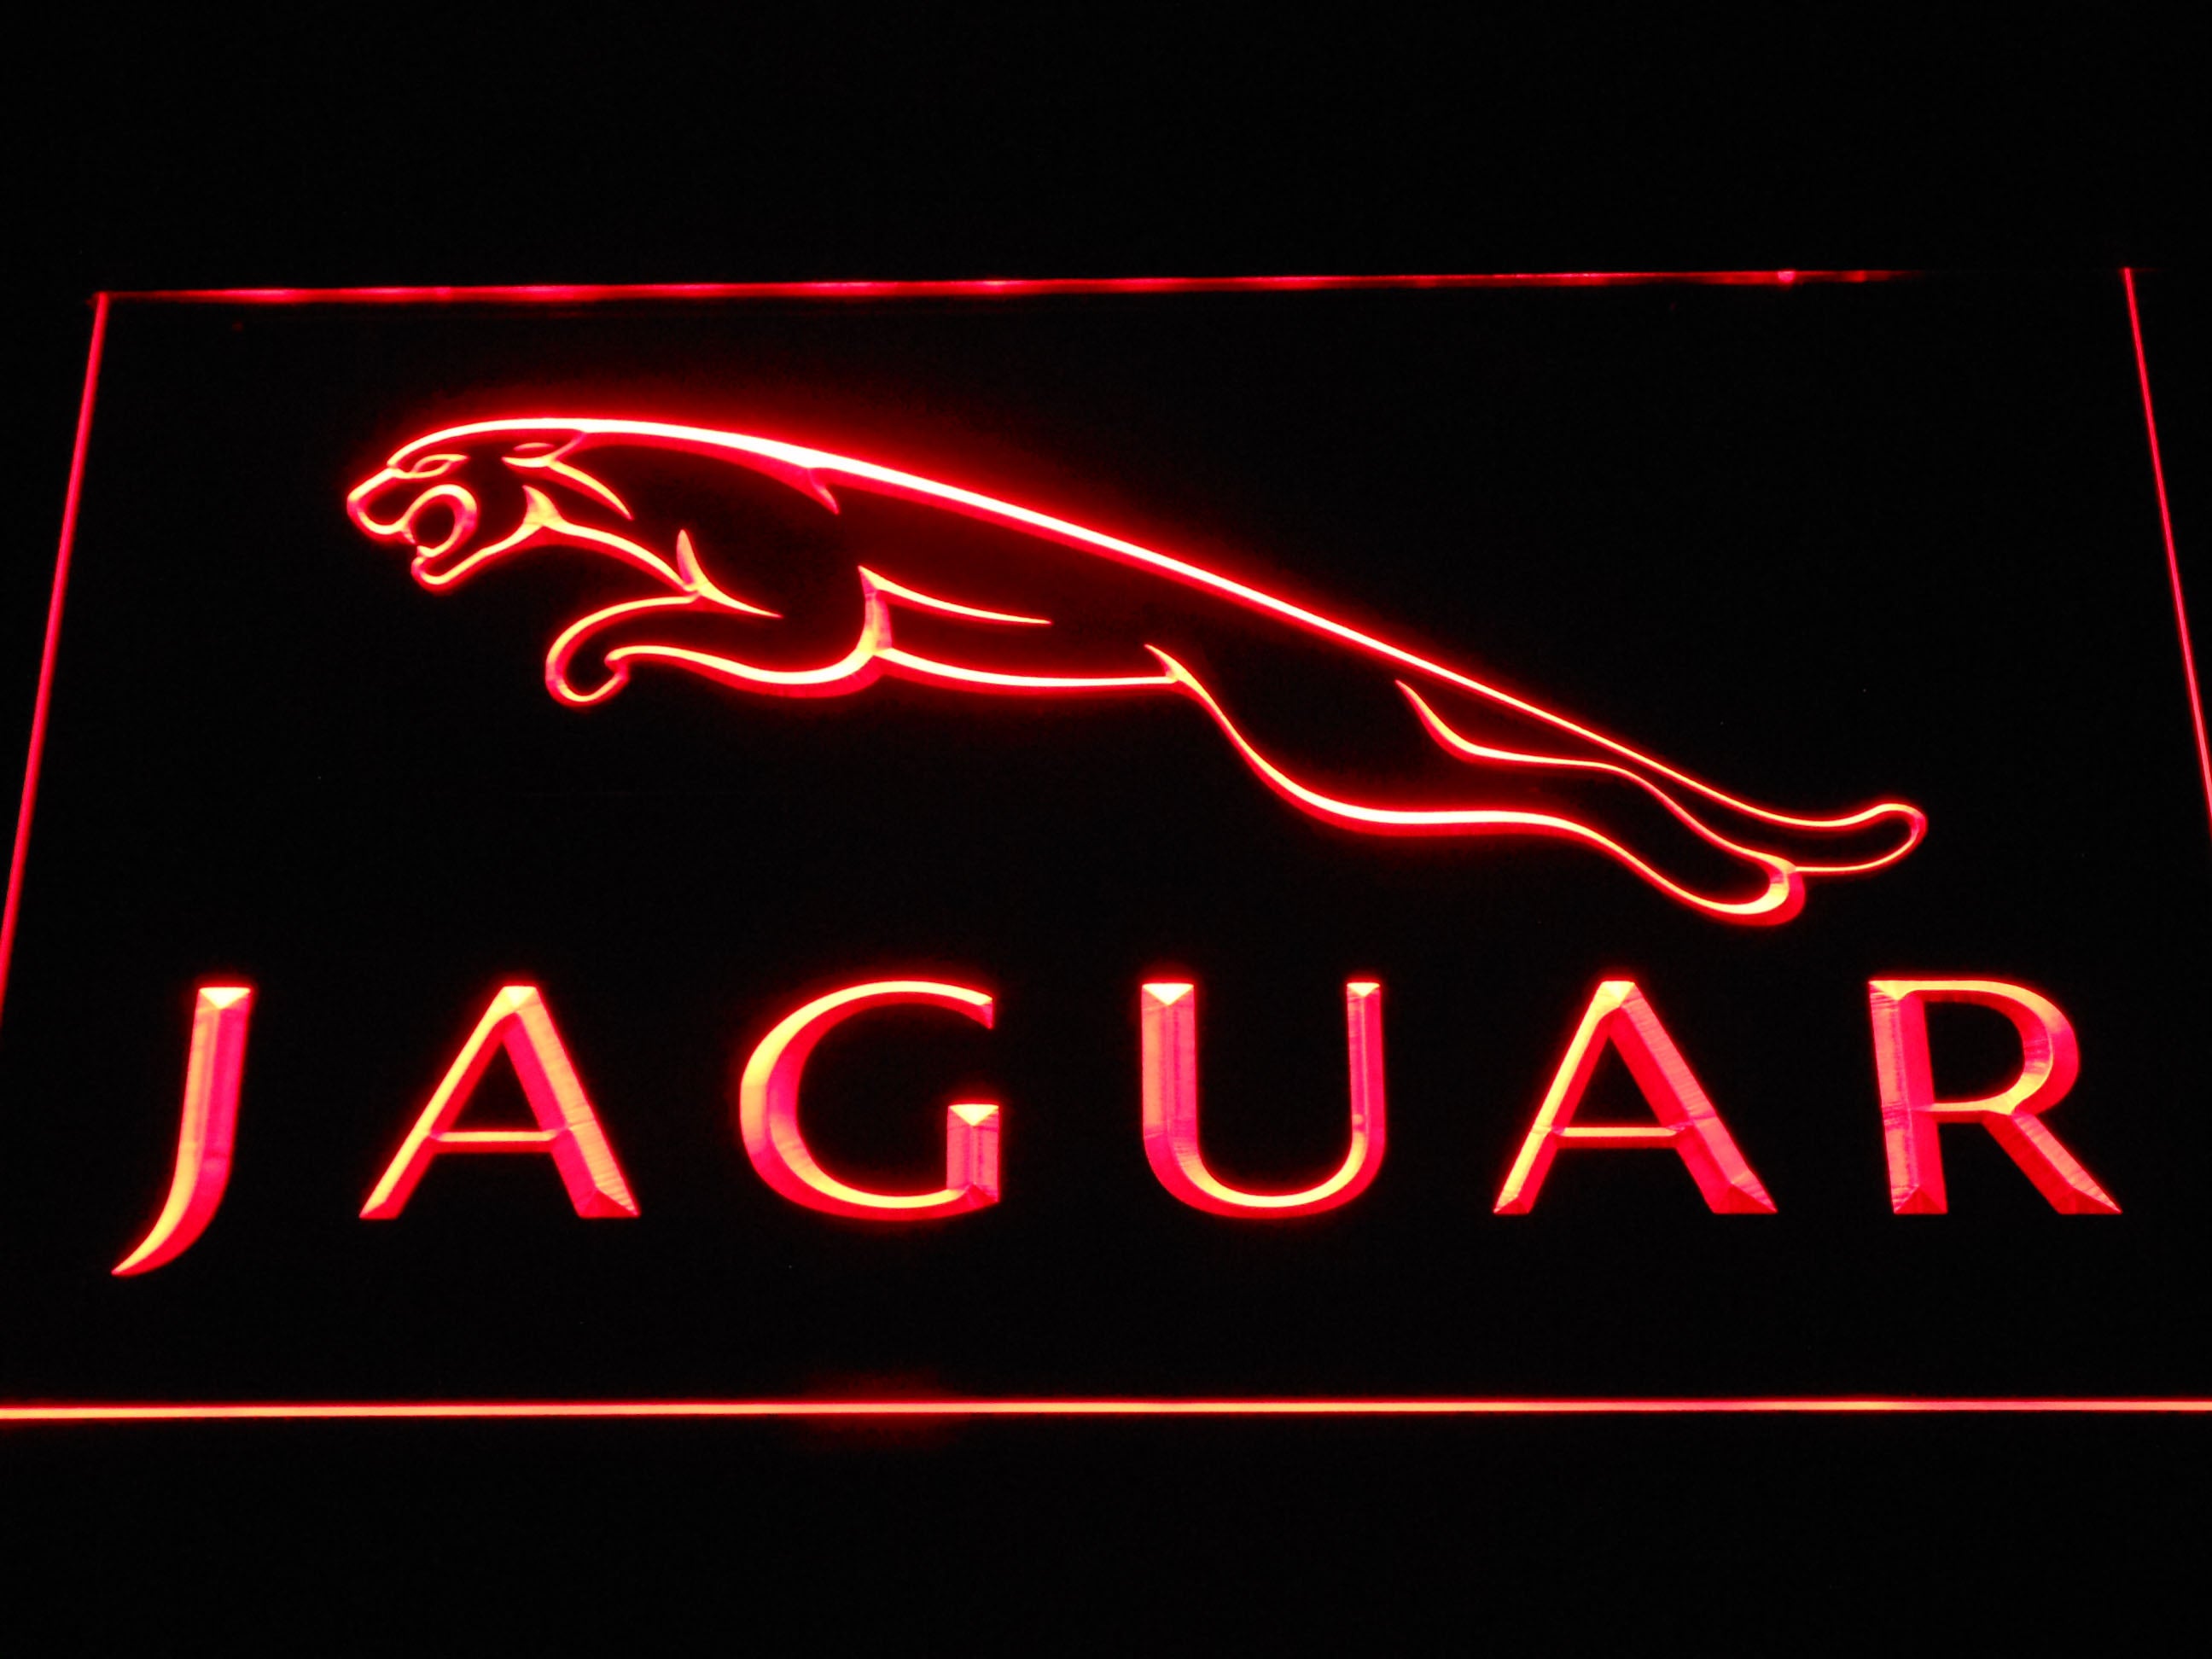 Jaguar Neon Light LED Sign